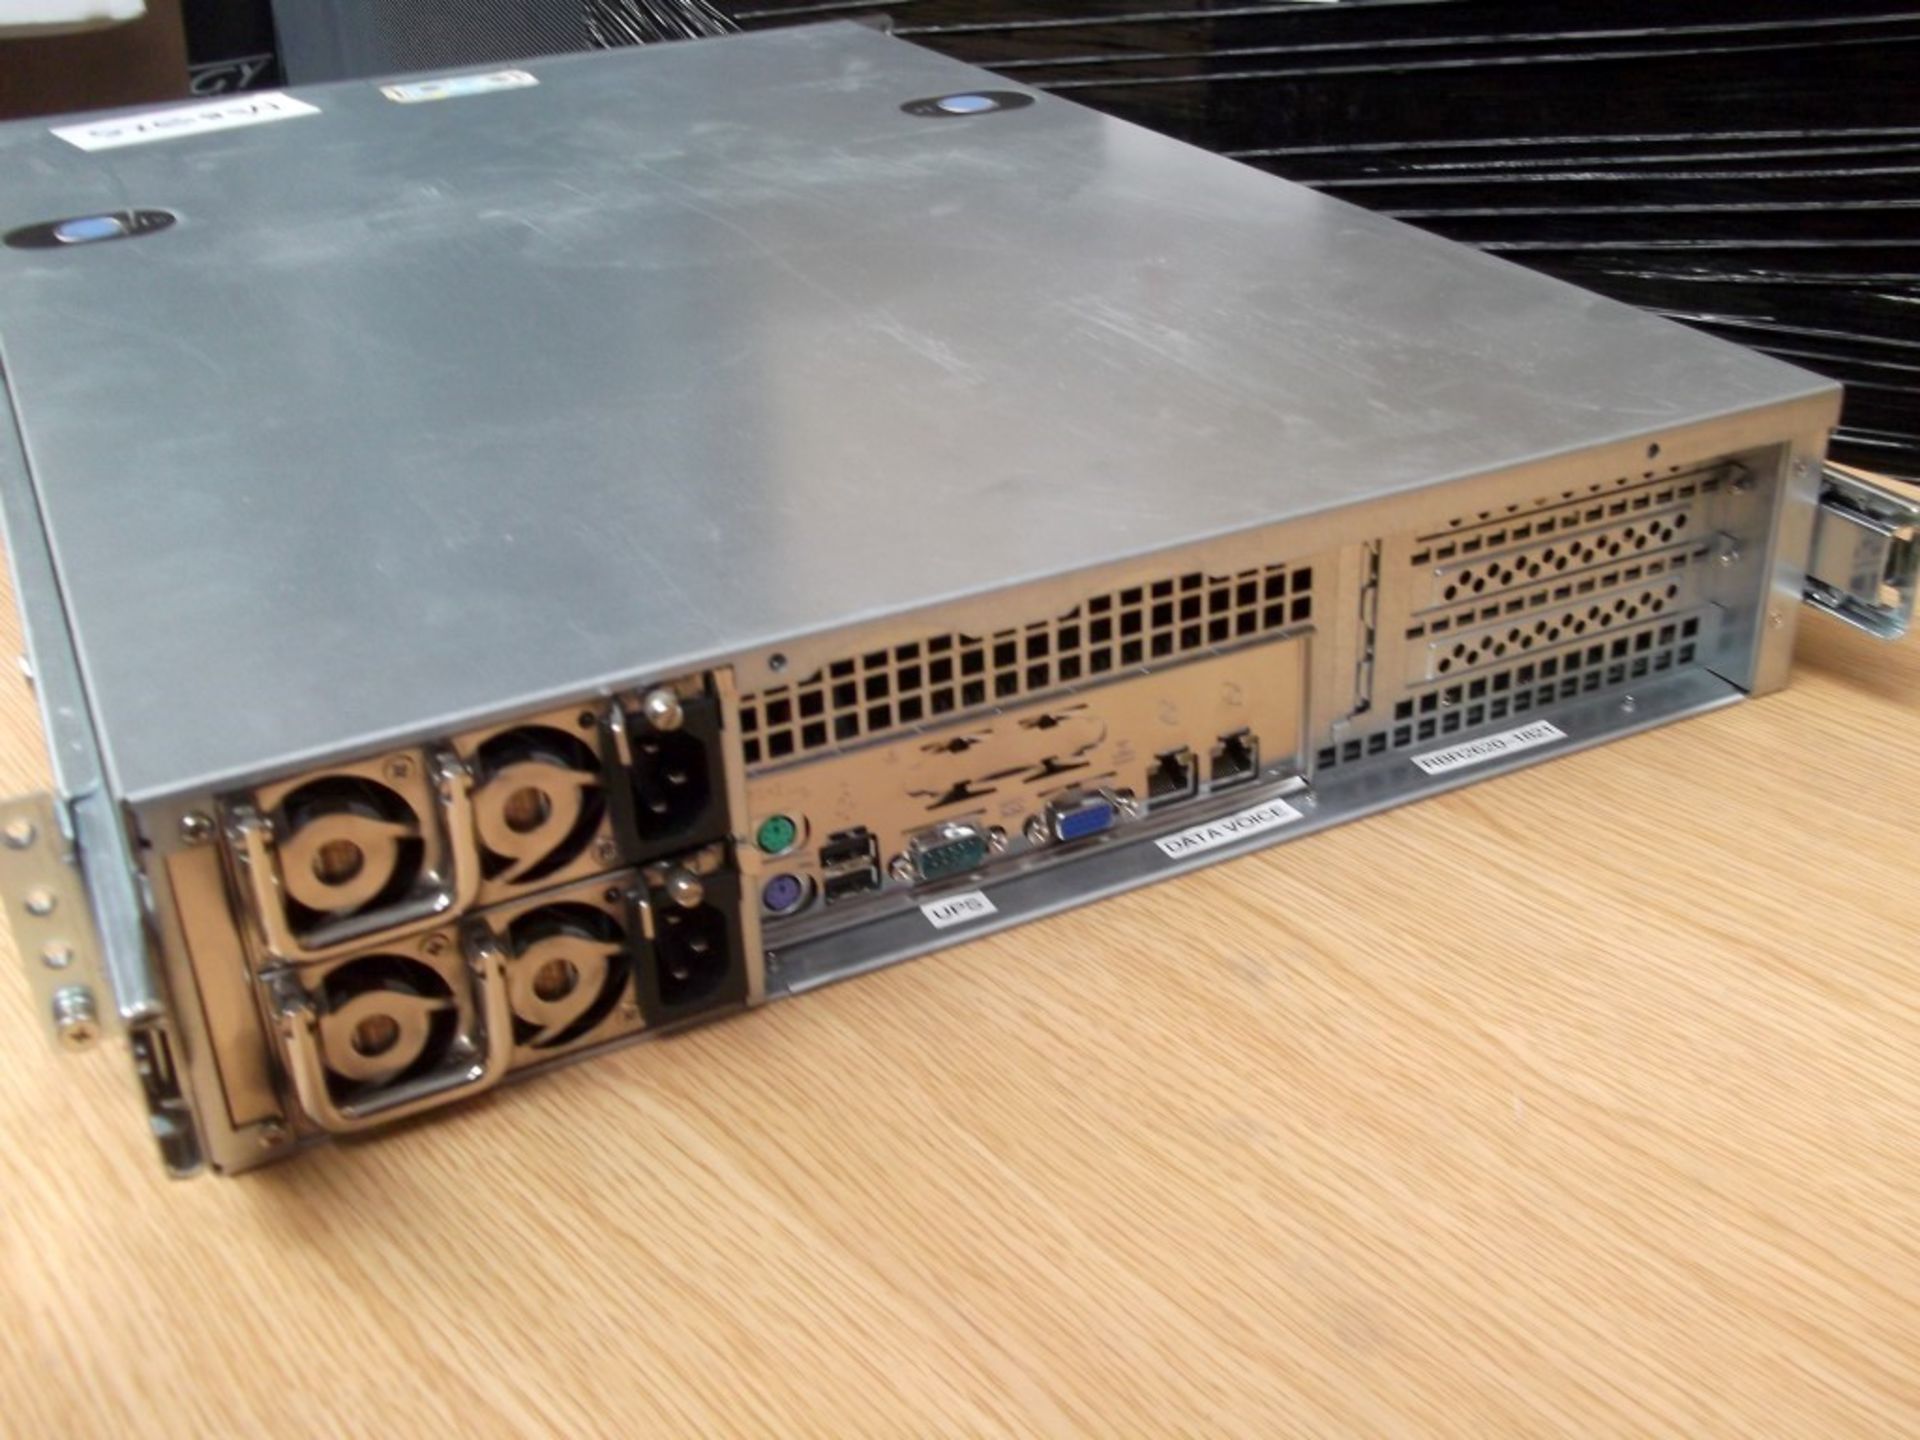 1 x Redbox Recorder - Enterprise IPT / Voice Recording Rackmount Server - Model RBR 2620 - Core 2 - Image 3 of 5